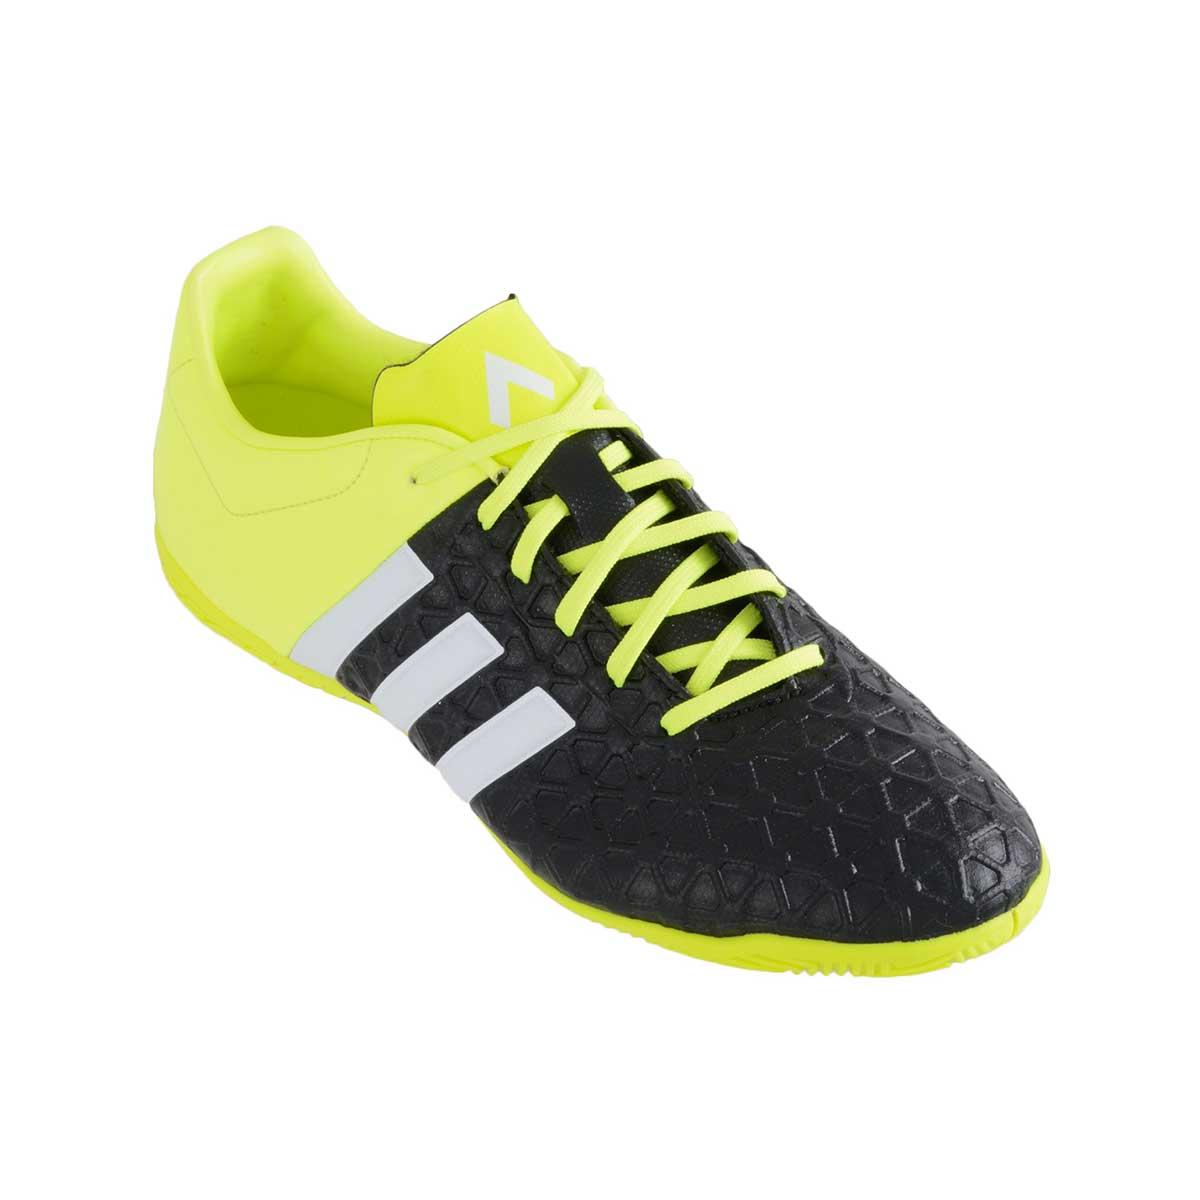 Buy Adidas 15.4 Indoor Football Shoes Online in India